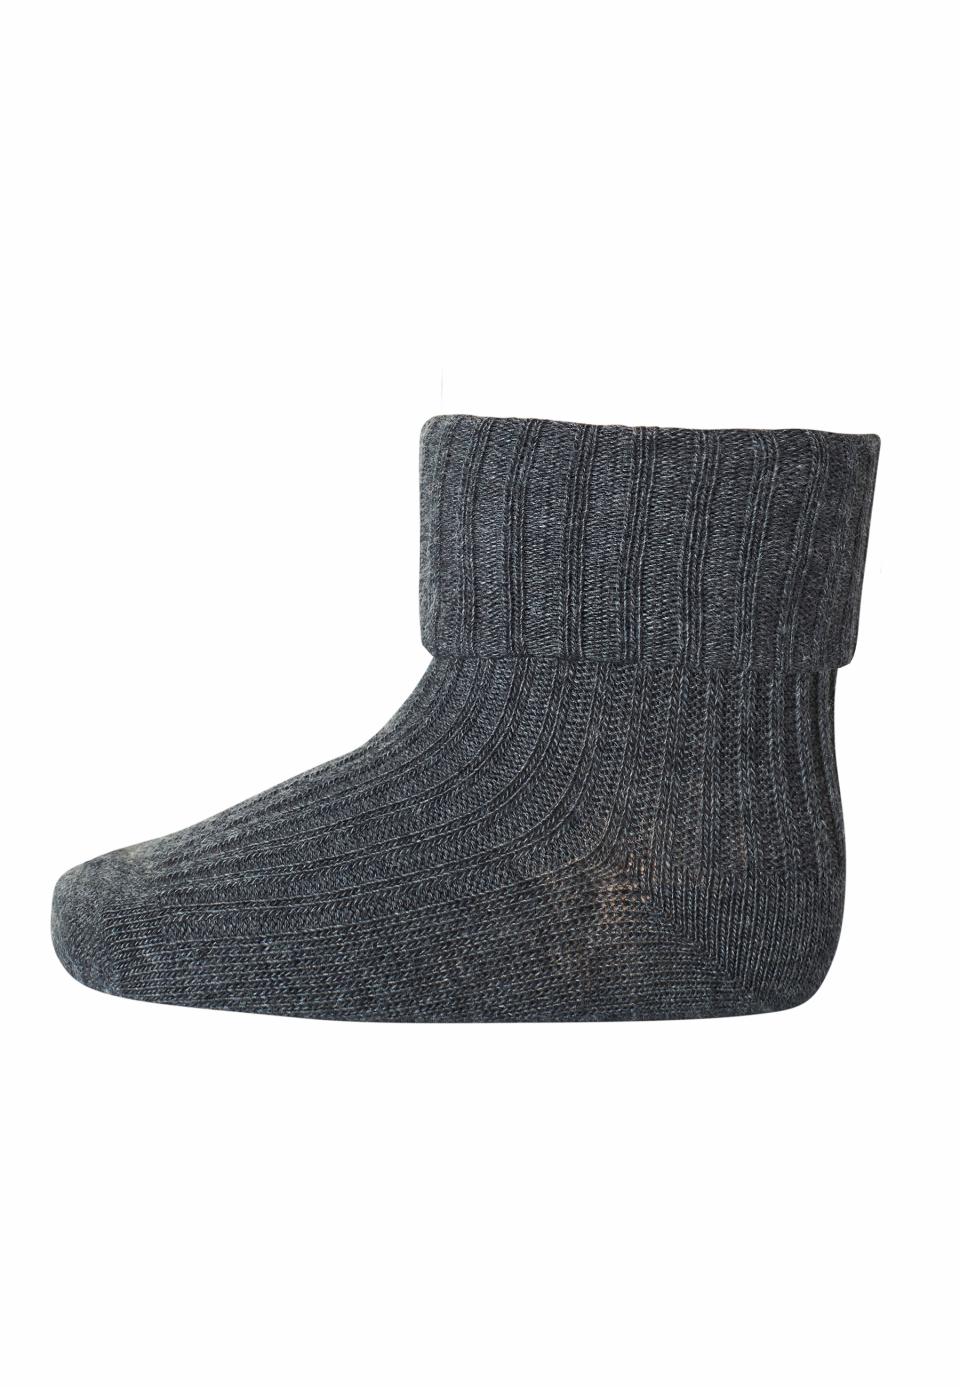 MP Denmark - cotton rib socks - 533 497 - dark grey melange - Hyggekids